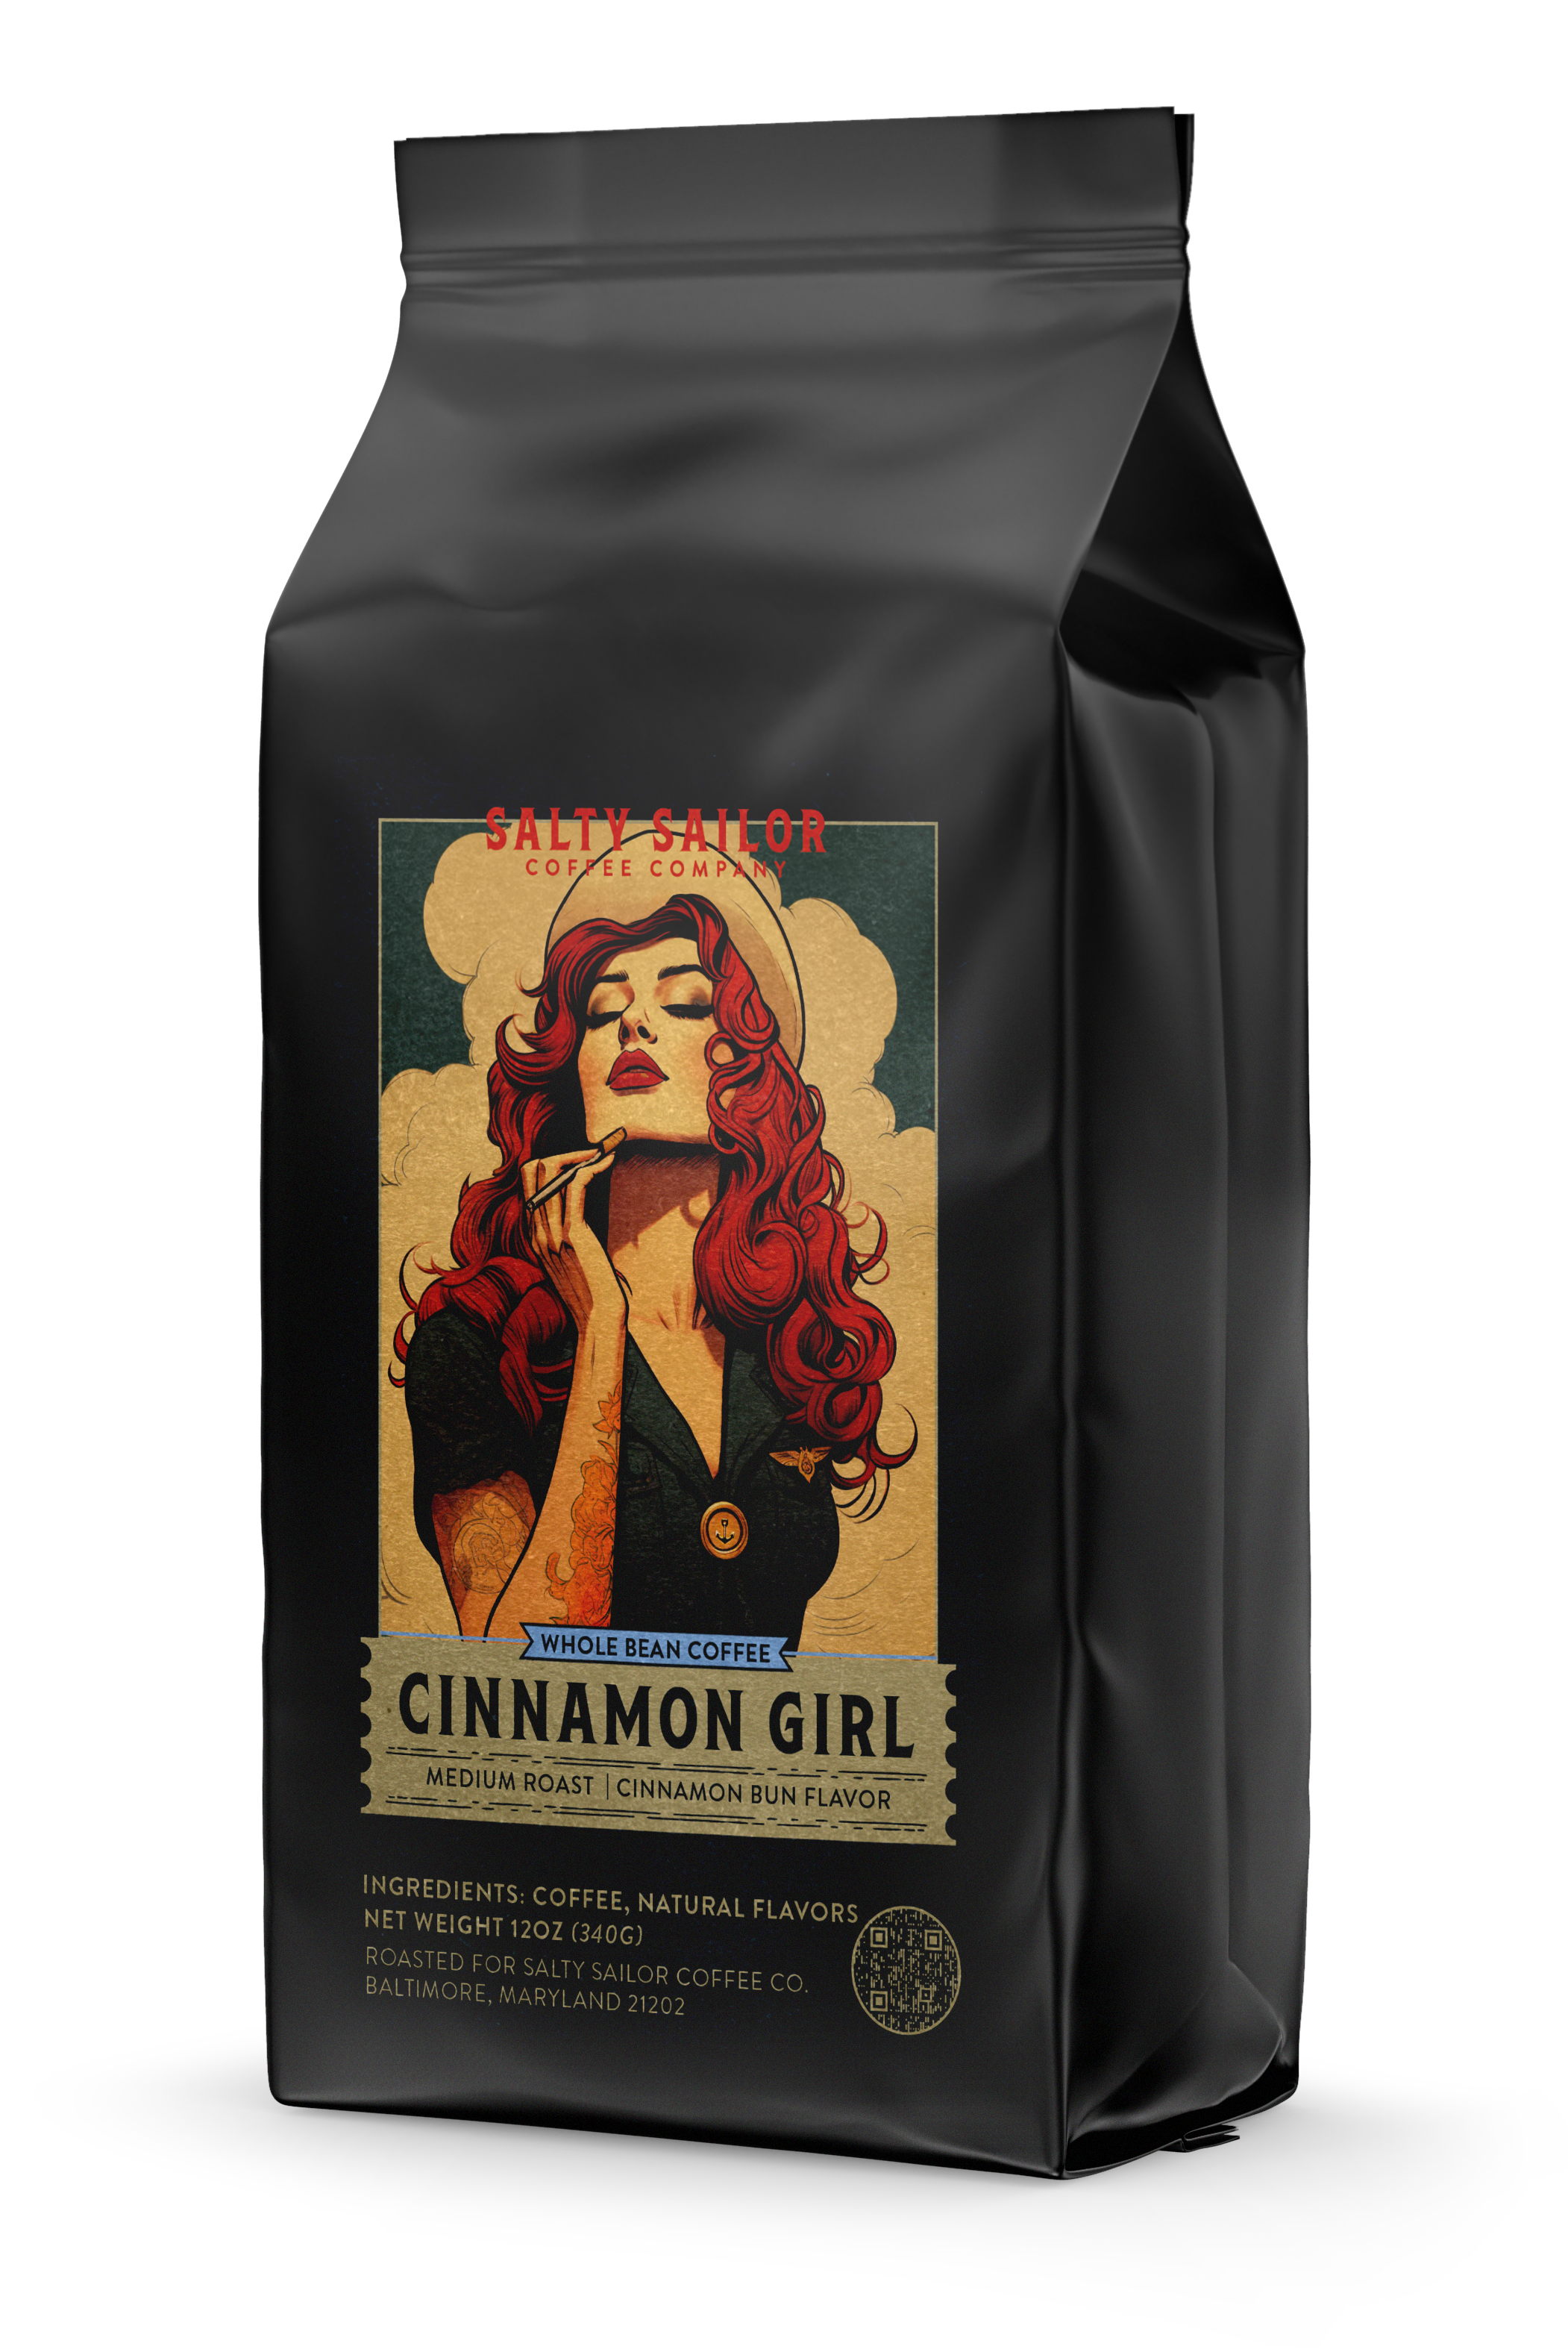 My Cinnamon Girl:  Cinnamon Bun Flavored Coffee